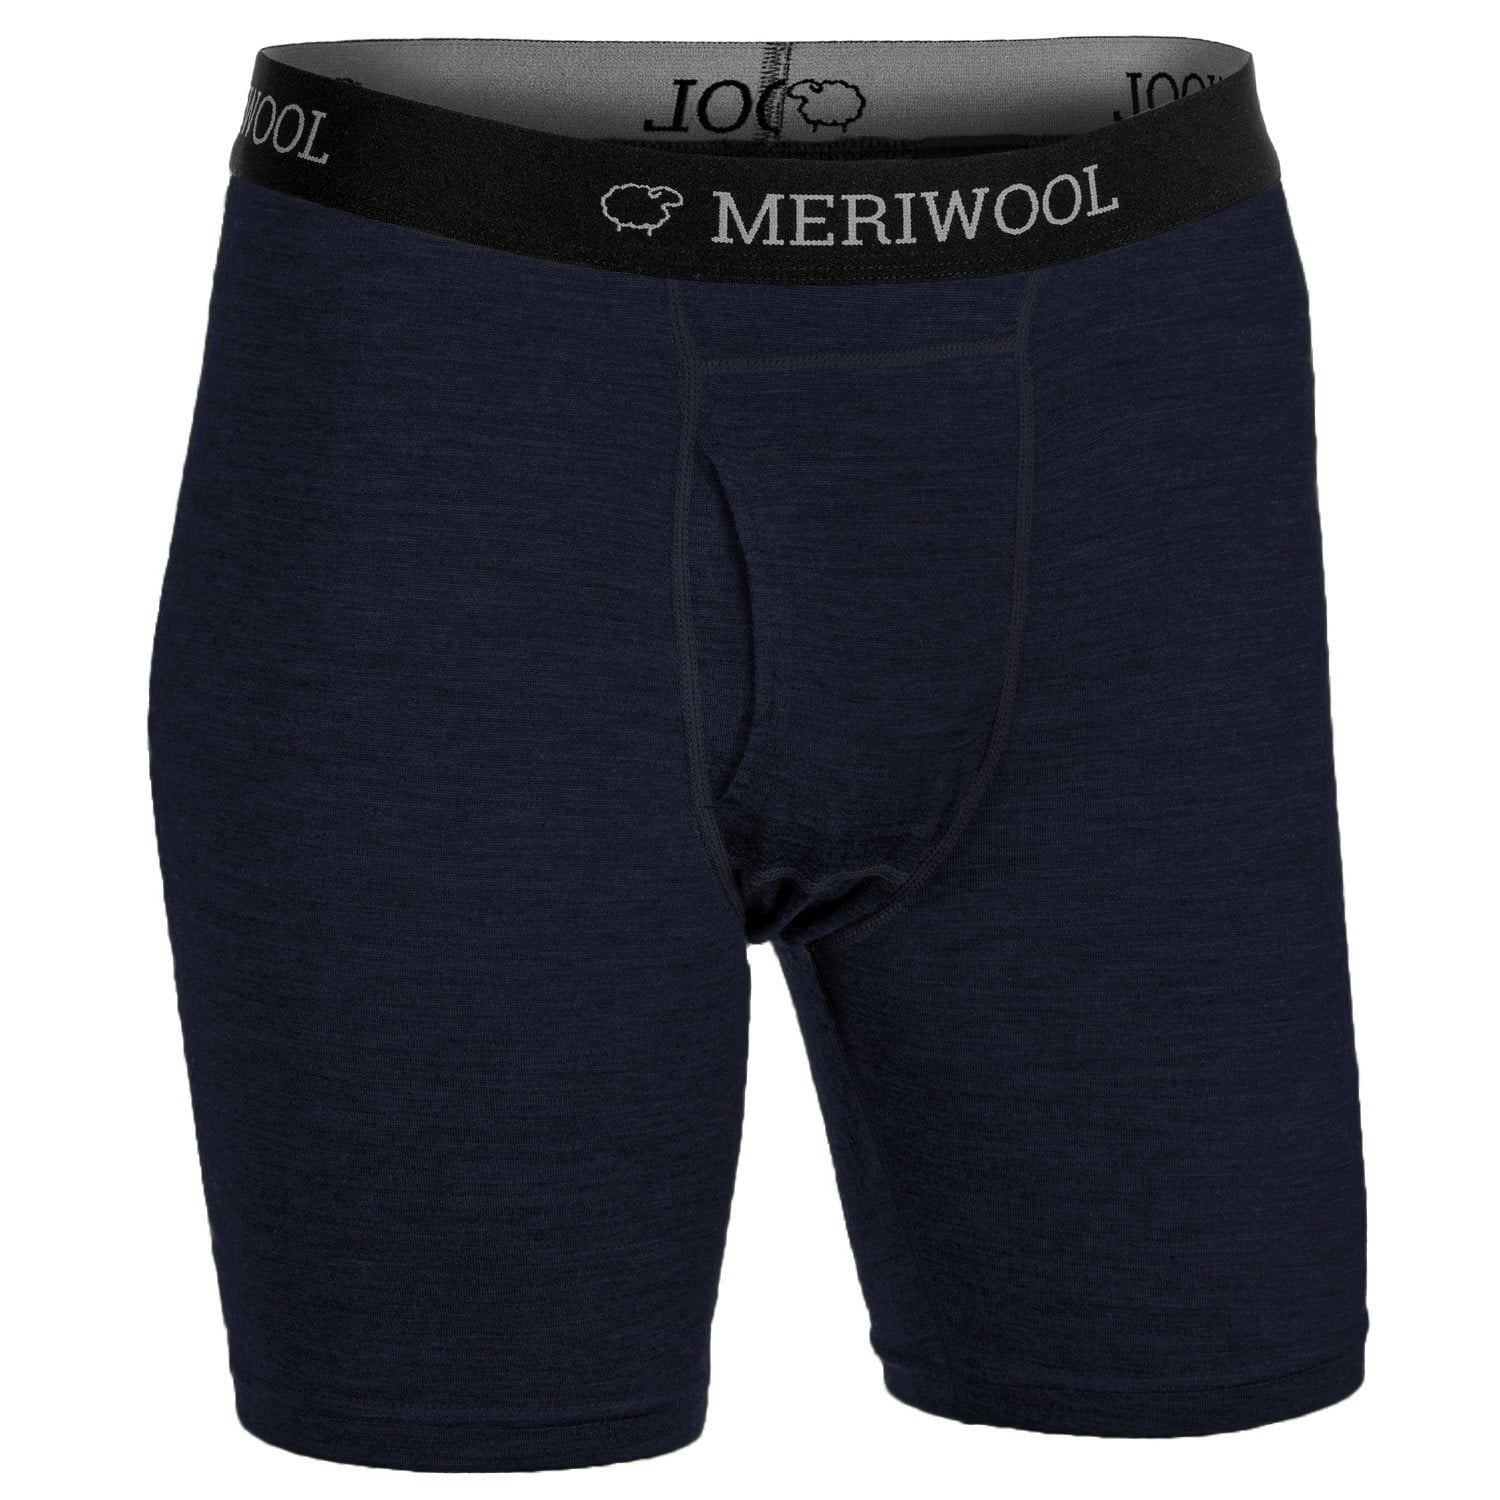 MERIWOOL Merino Wool Men's Boxer Brief Underwear - Walmart.com